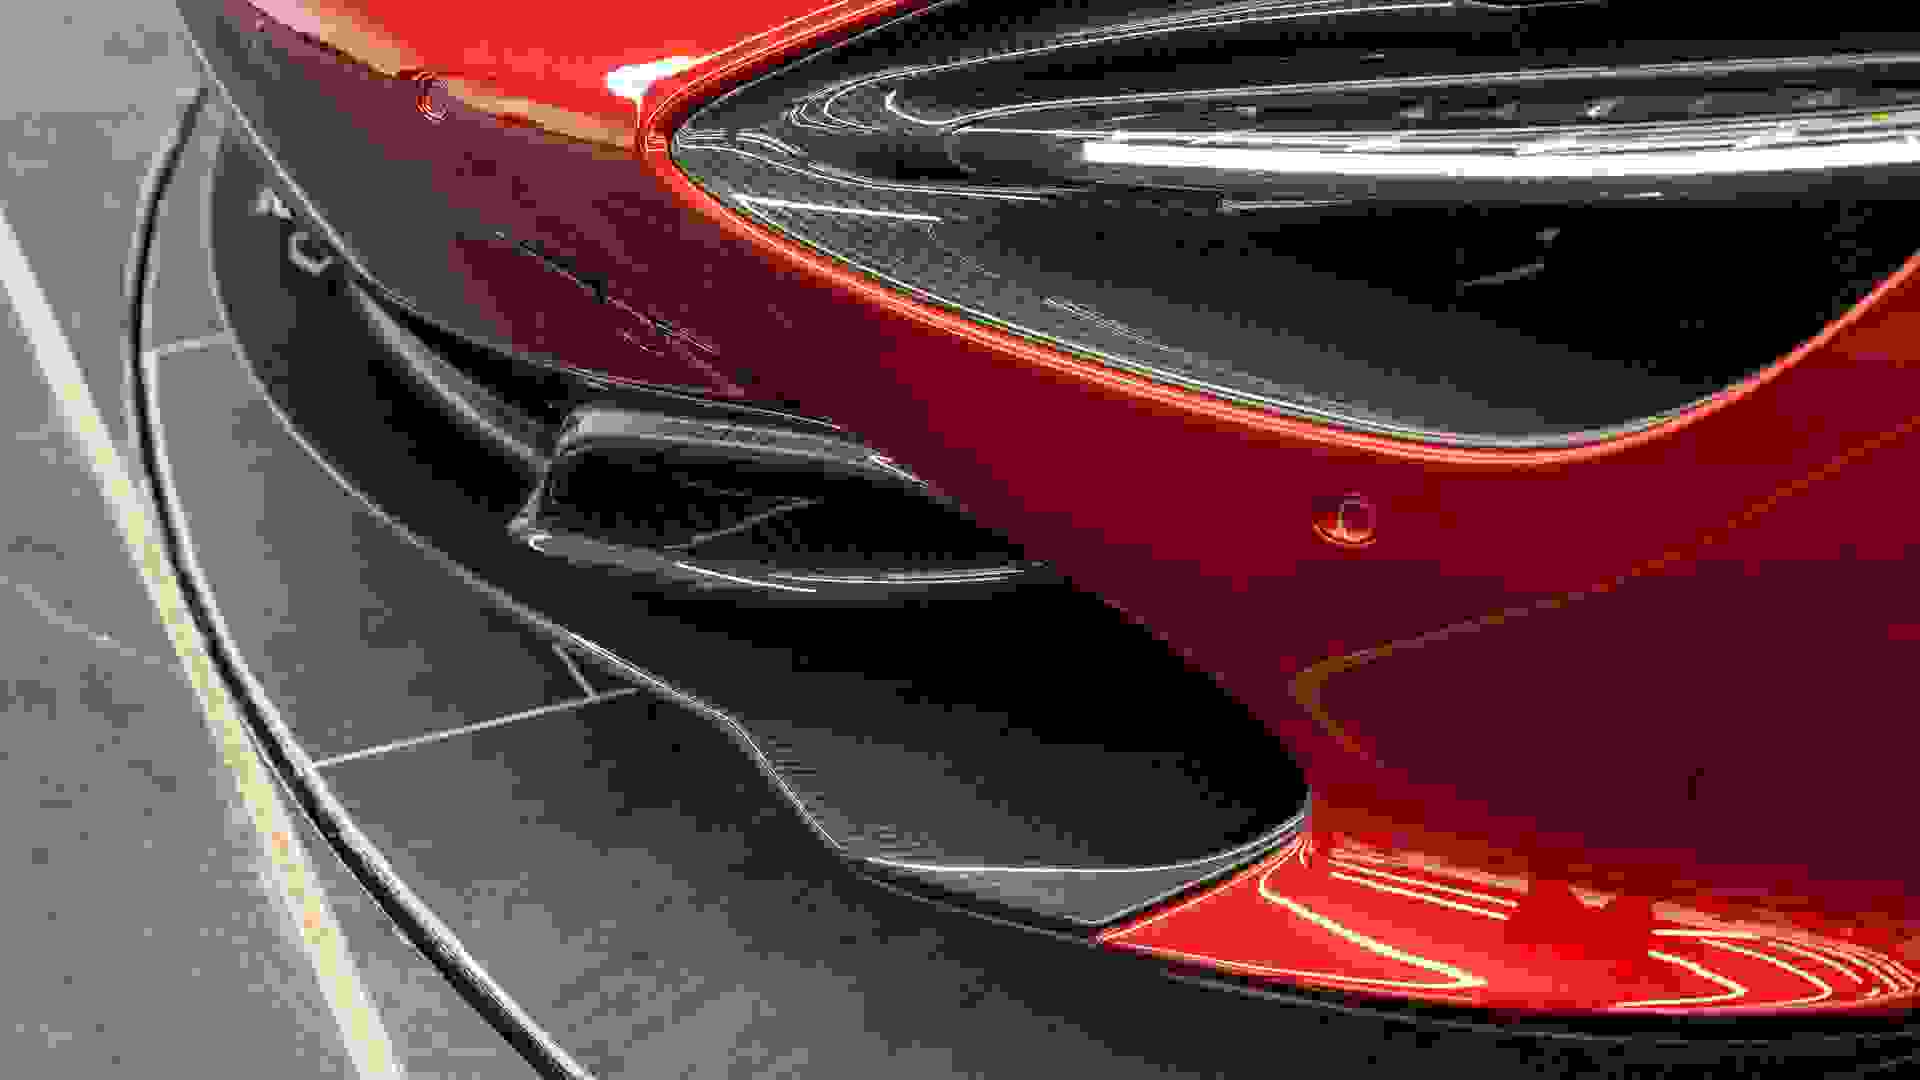 McLaren 720S Photo 15cb01dd-530b-43e3-9446-8f32061fe909.jpg